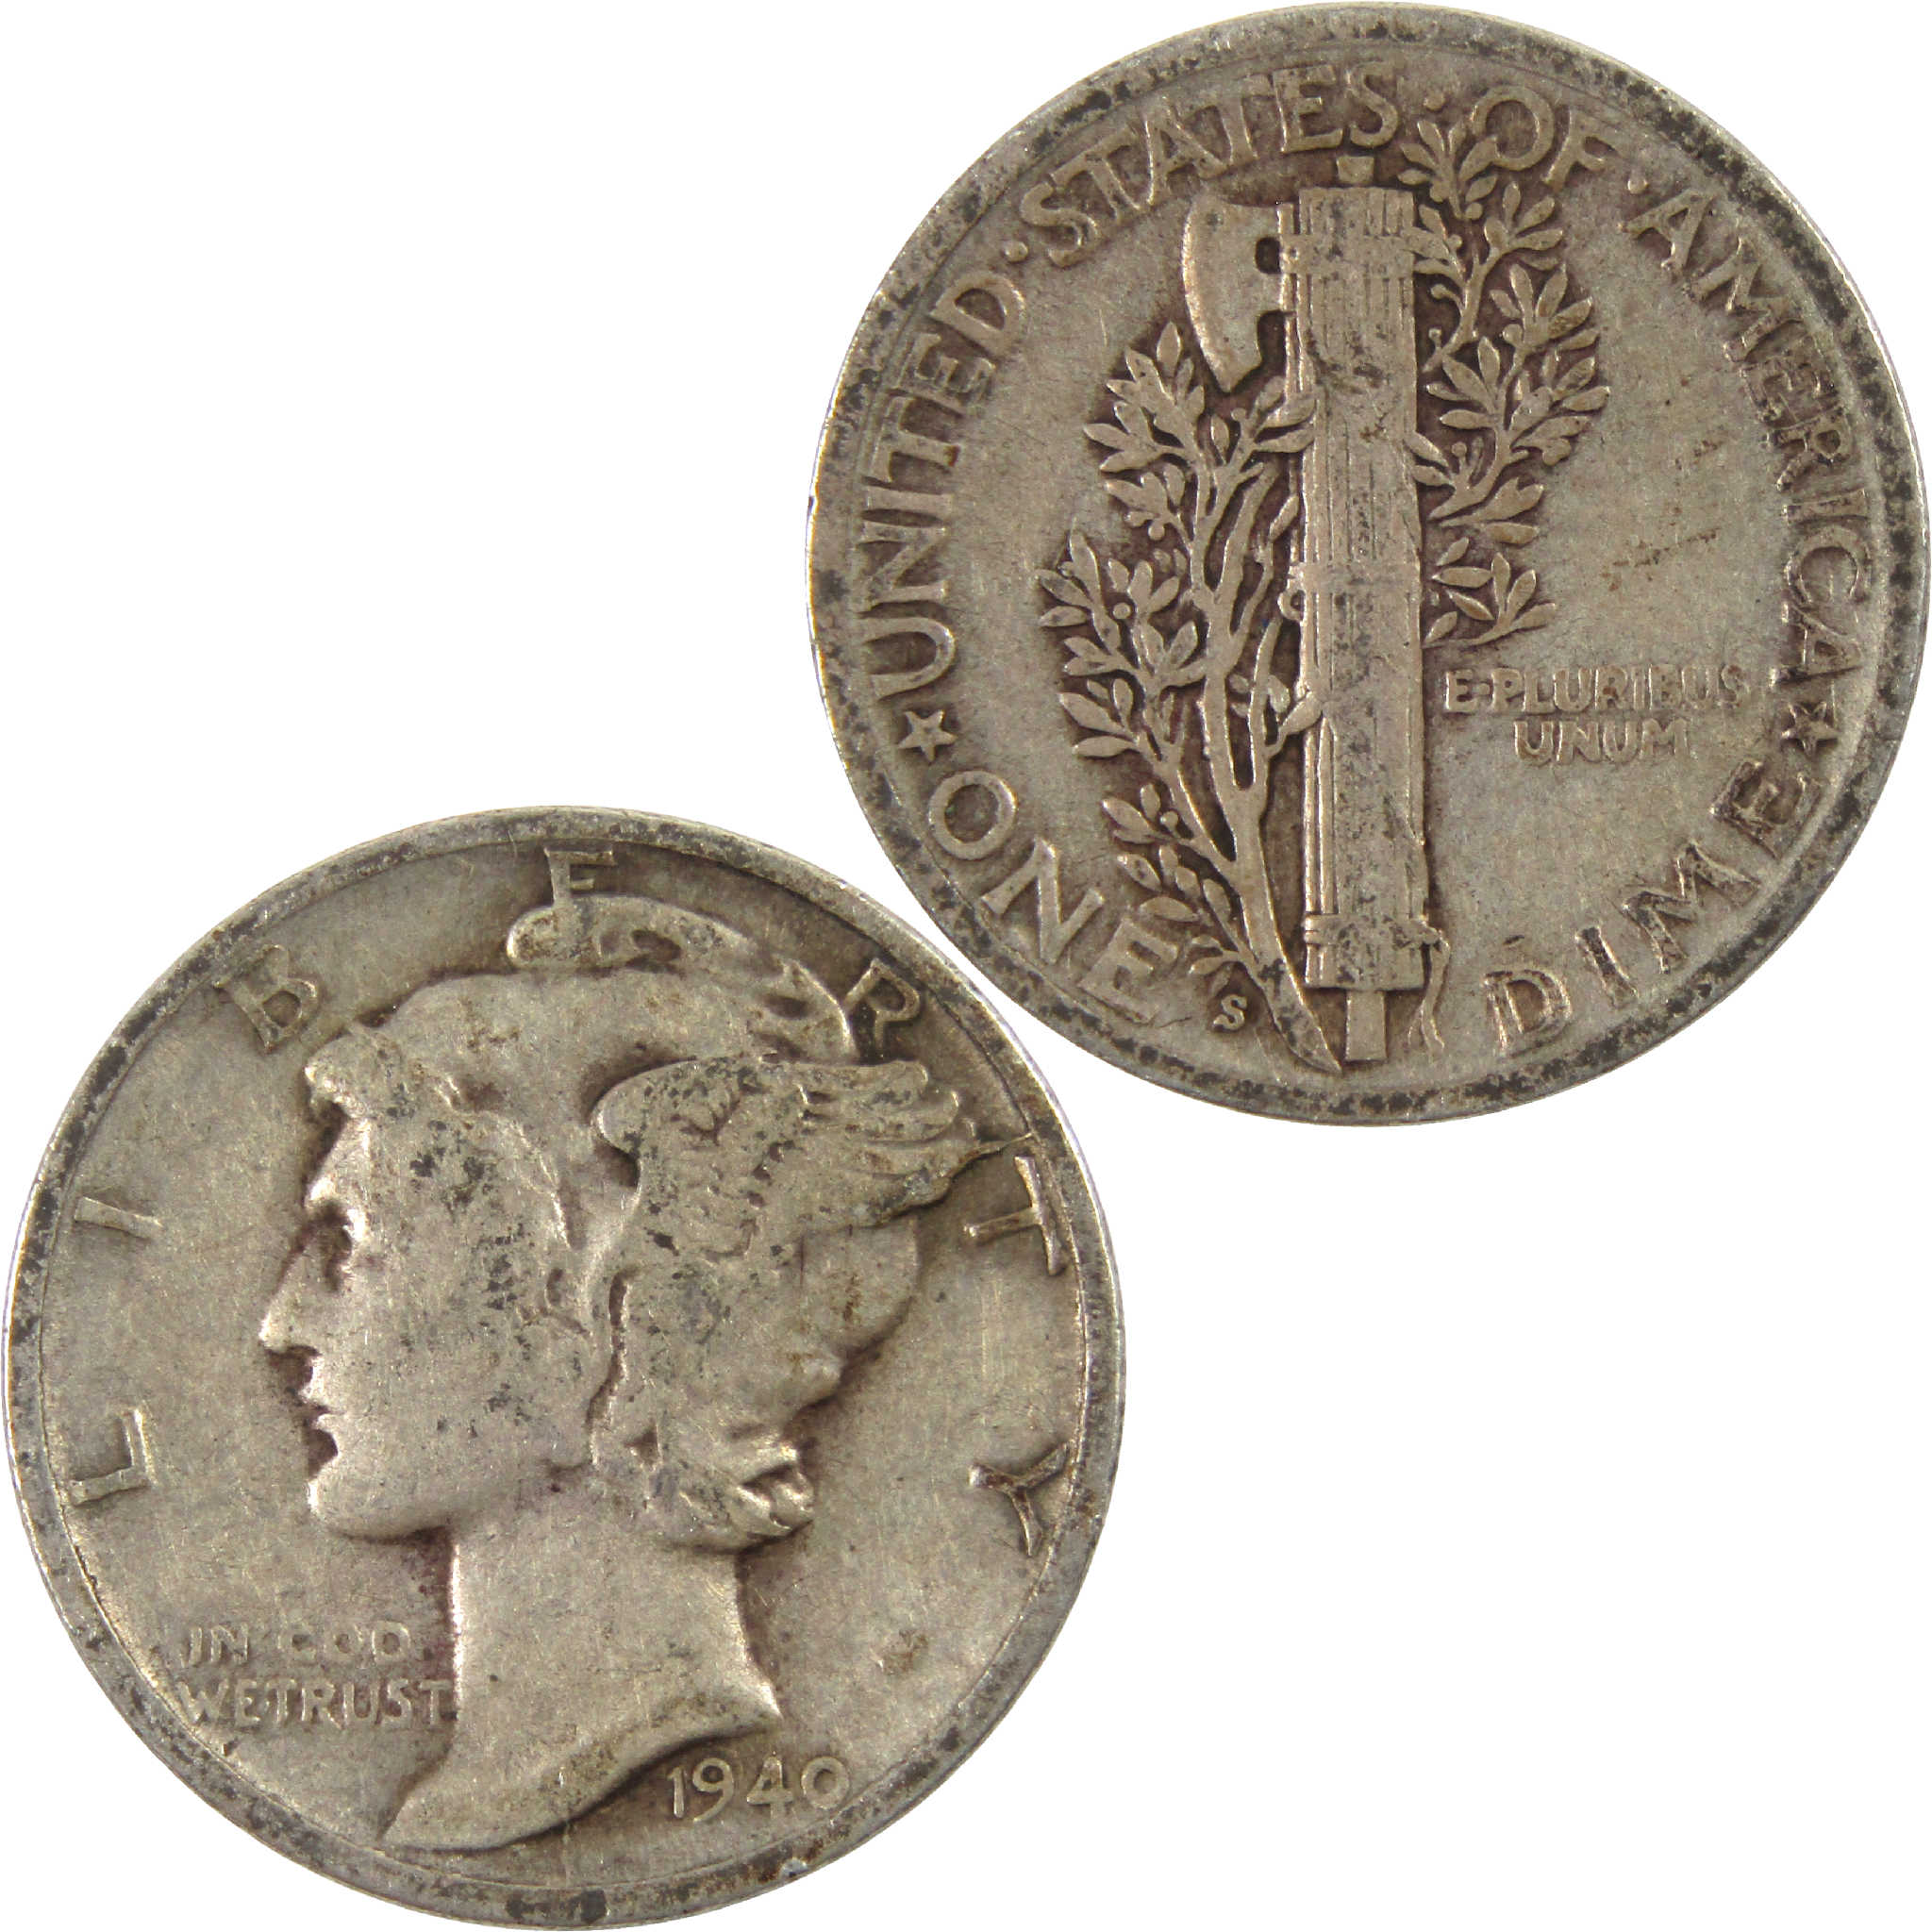 1940 S Mercury Dime VG Very Good Silver 10c Coin